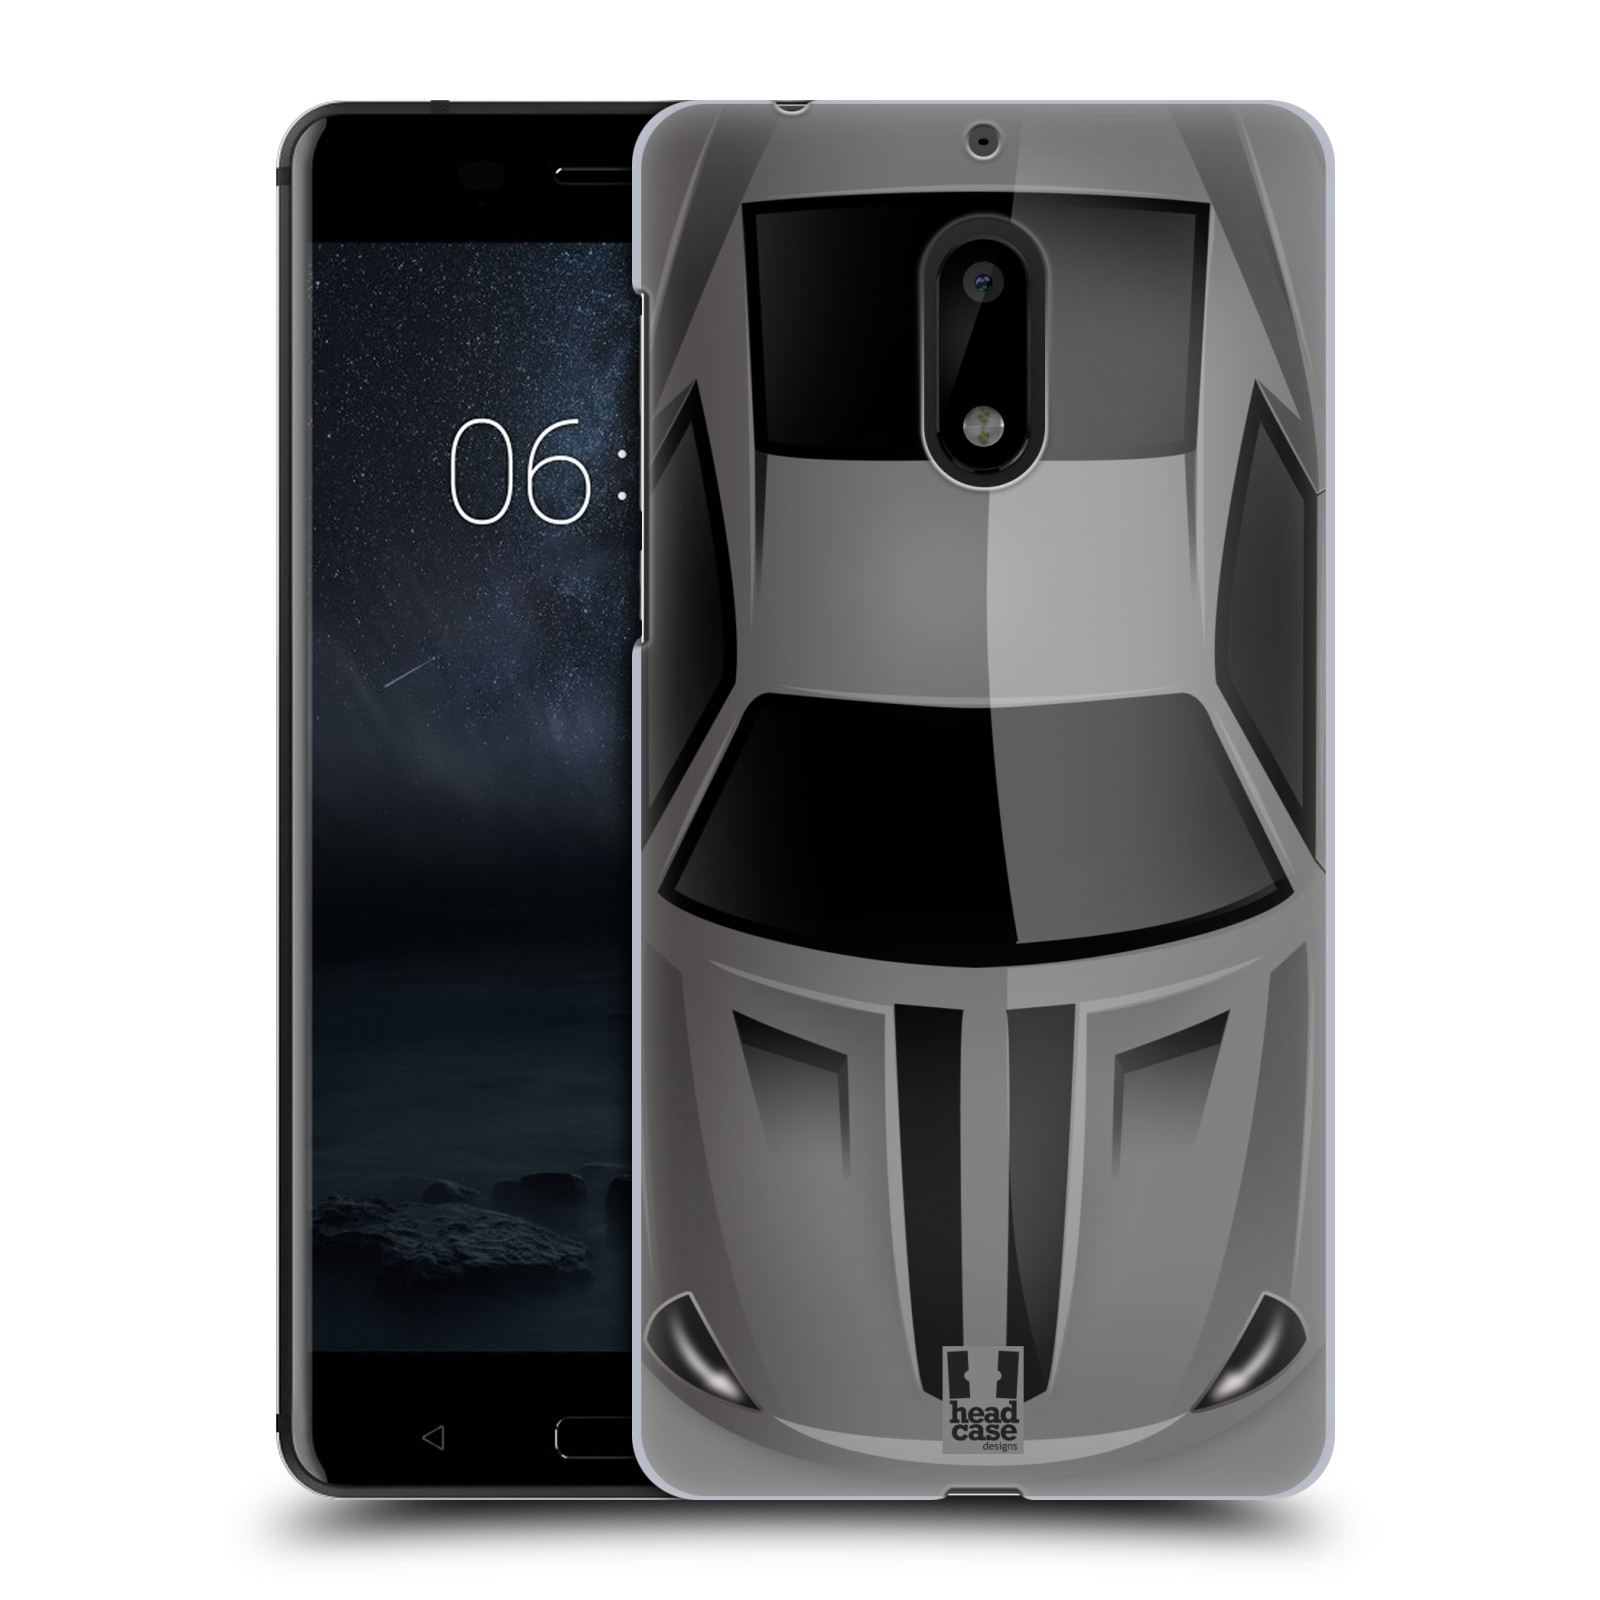 HEAD CASE plastový obal na mobil Nokia 6 vzor Auto horní pohled šedá